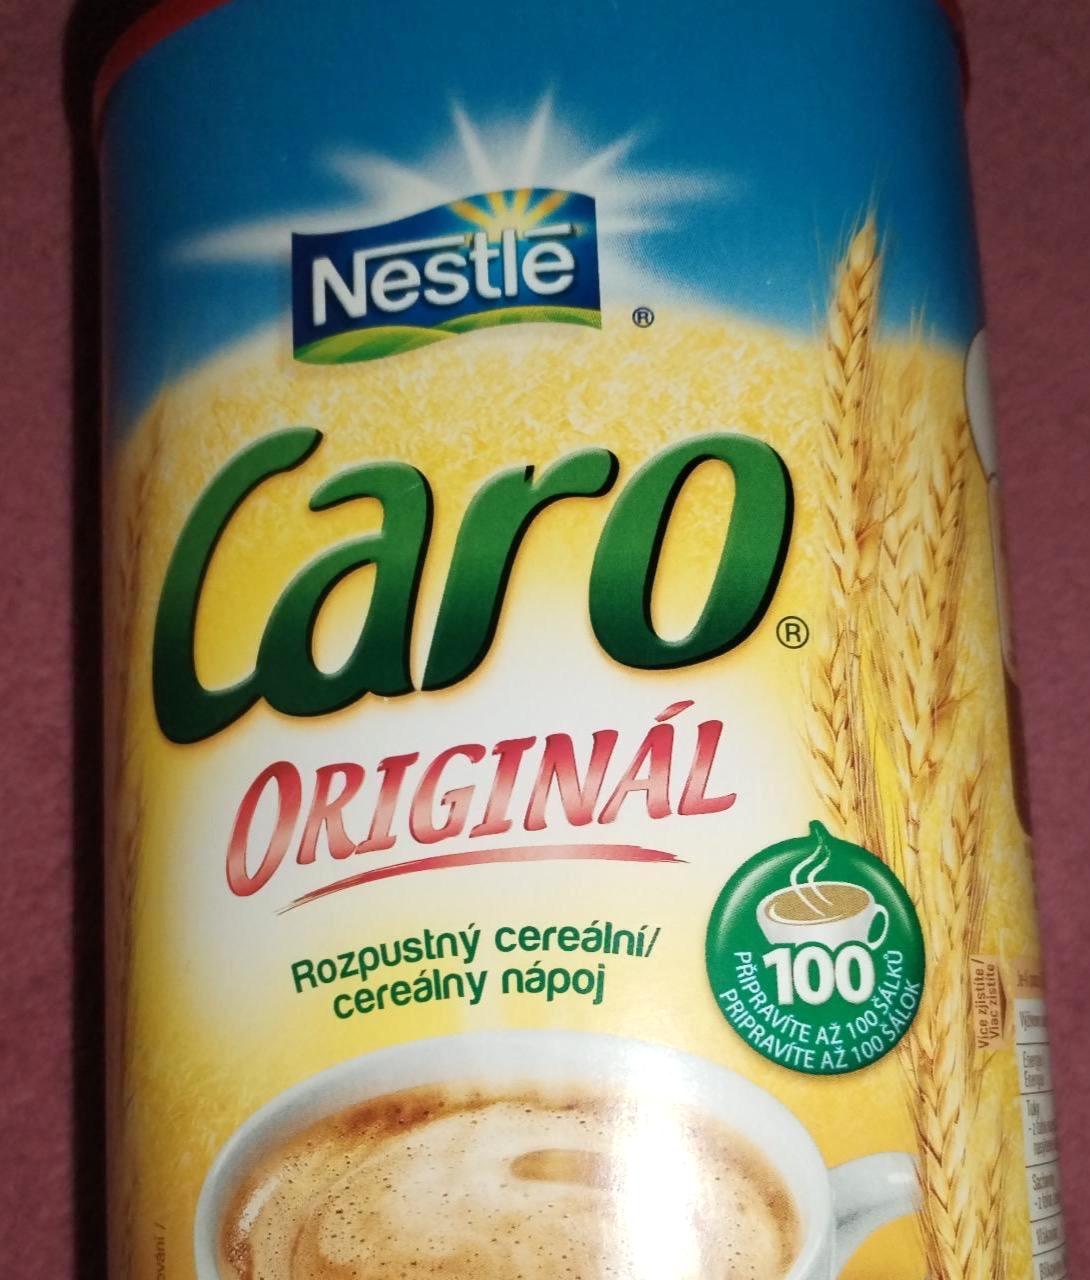 Képek - Caro Originál kávé Nestlé